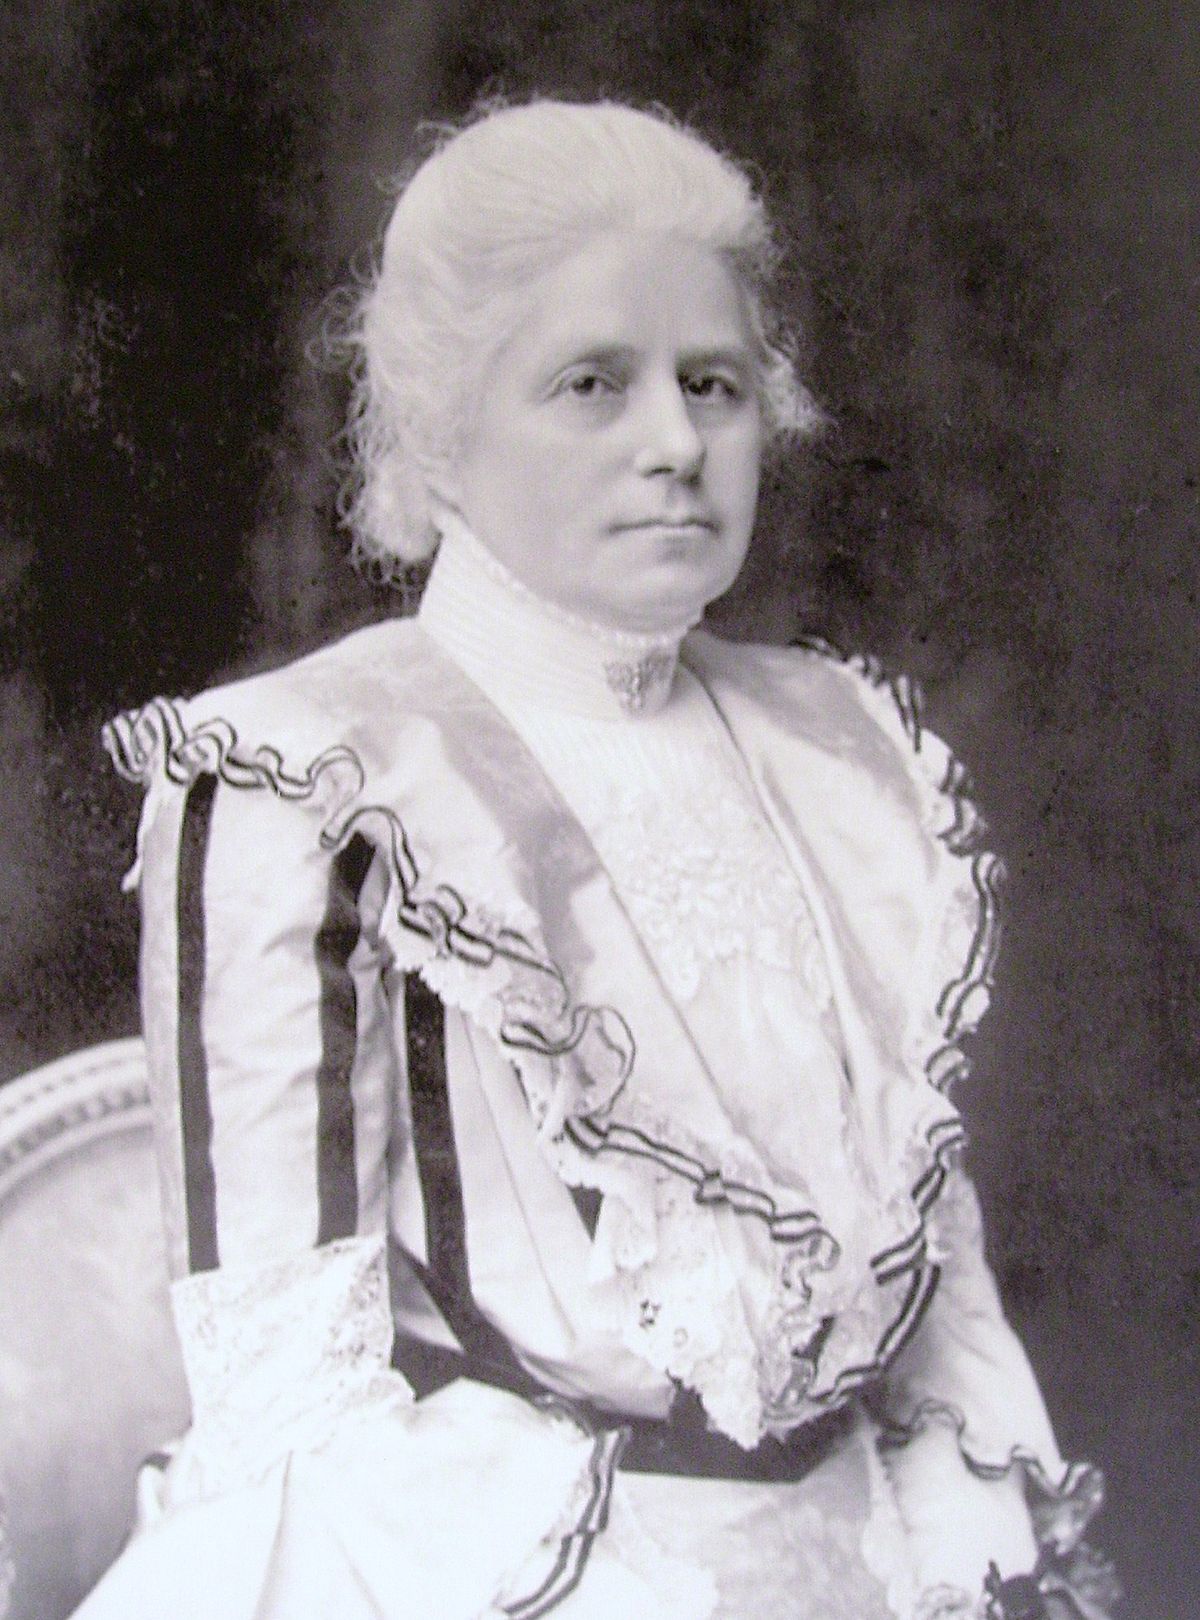 Wilhelmina von Hallwyl, cirka 1902. Fotograf okänd (Hallwylska museet/Wikimedia Commons)